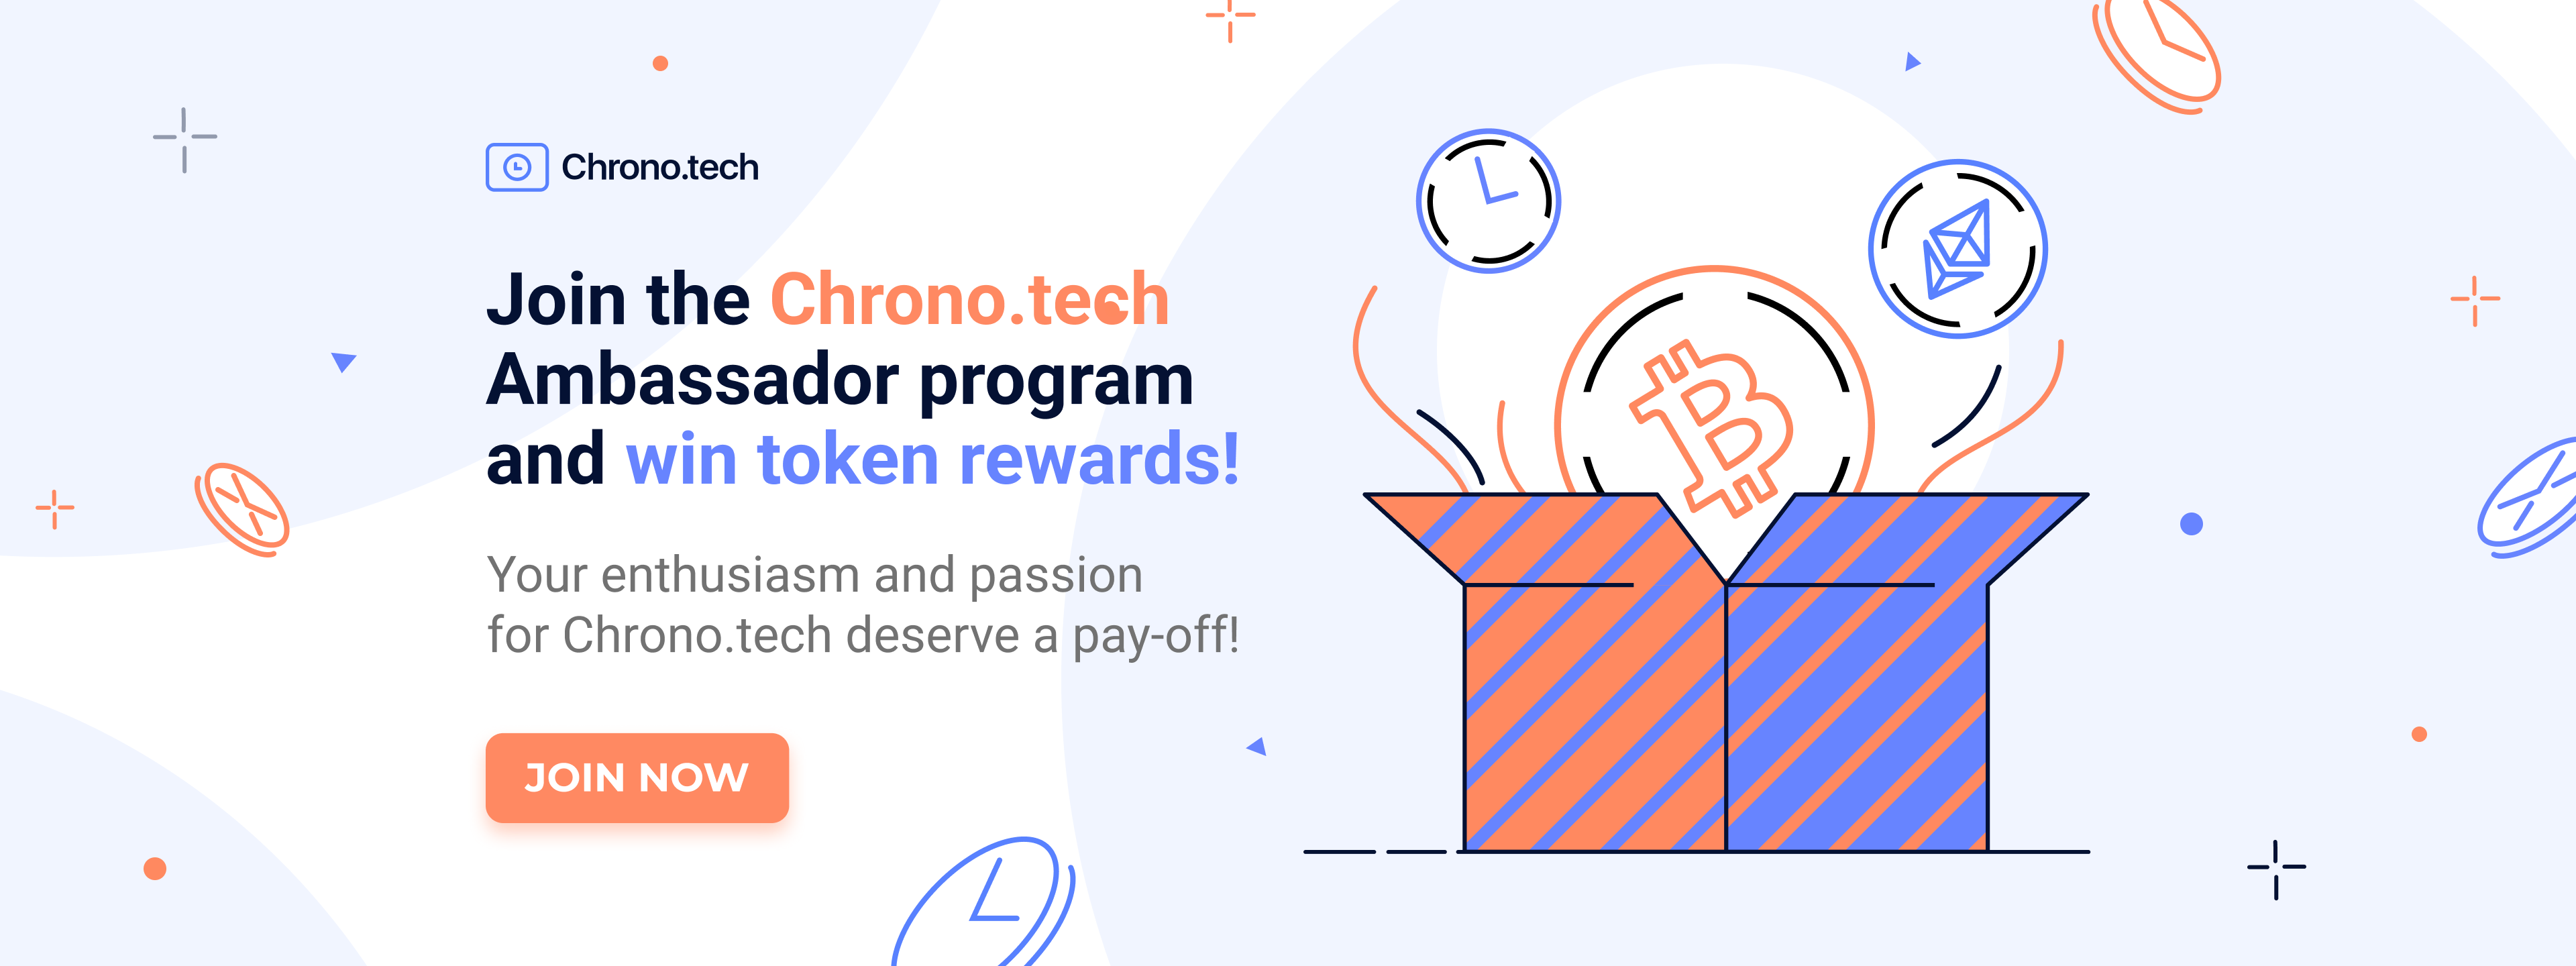 Join the Chrono.tech Ambassador program and win token rewards!